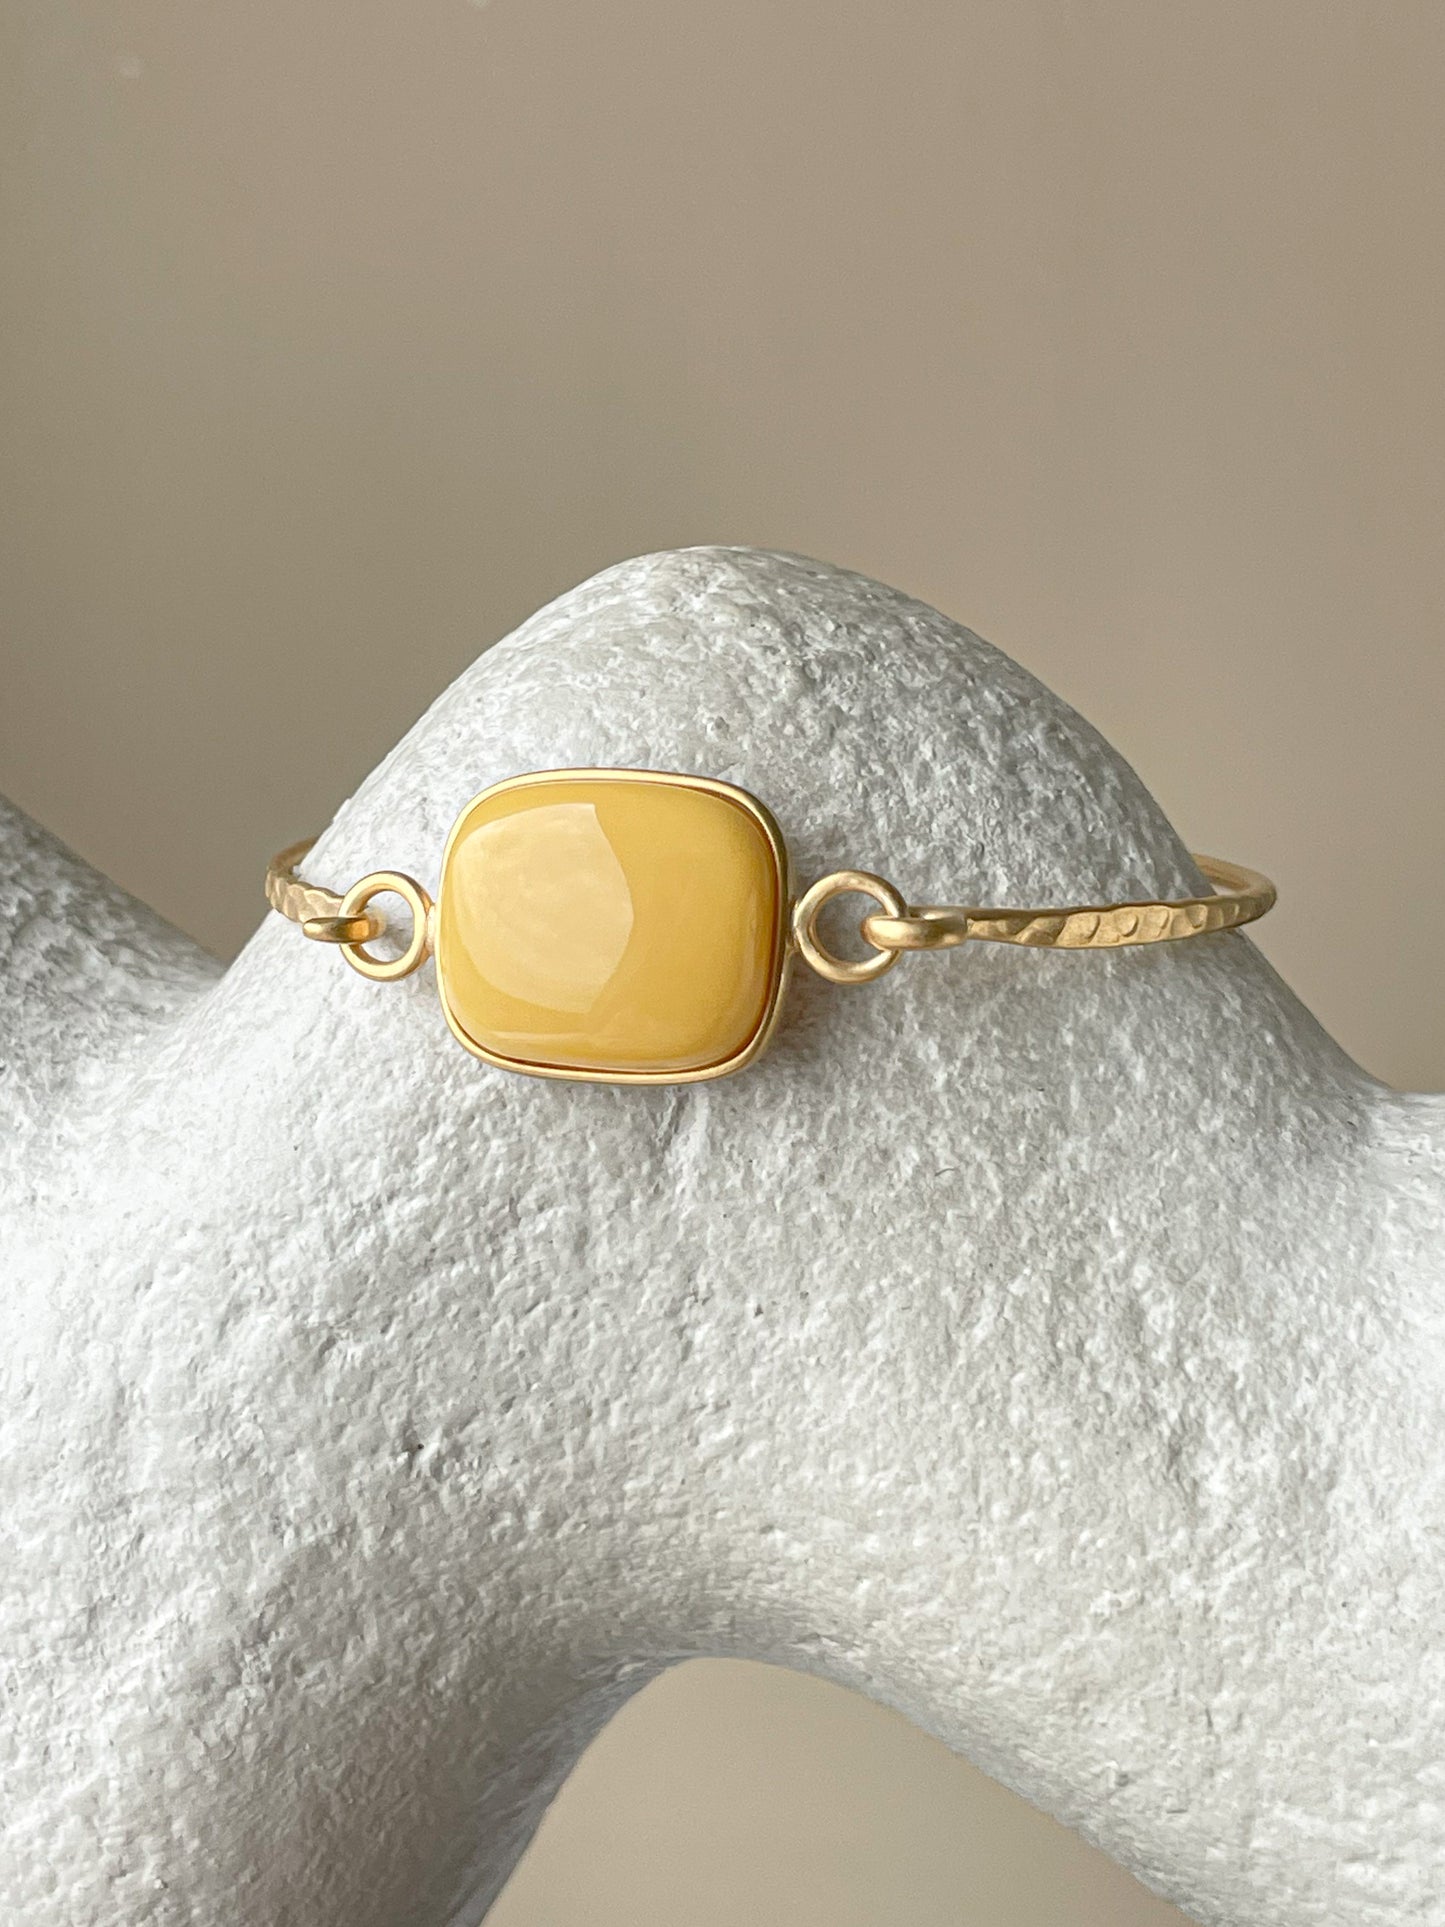 Amber bracelet - Gold plated silver - Bangle bracelet collection 